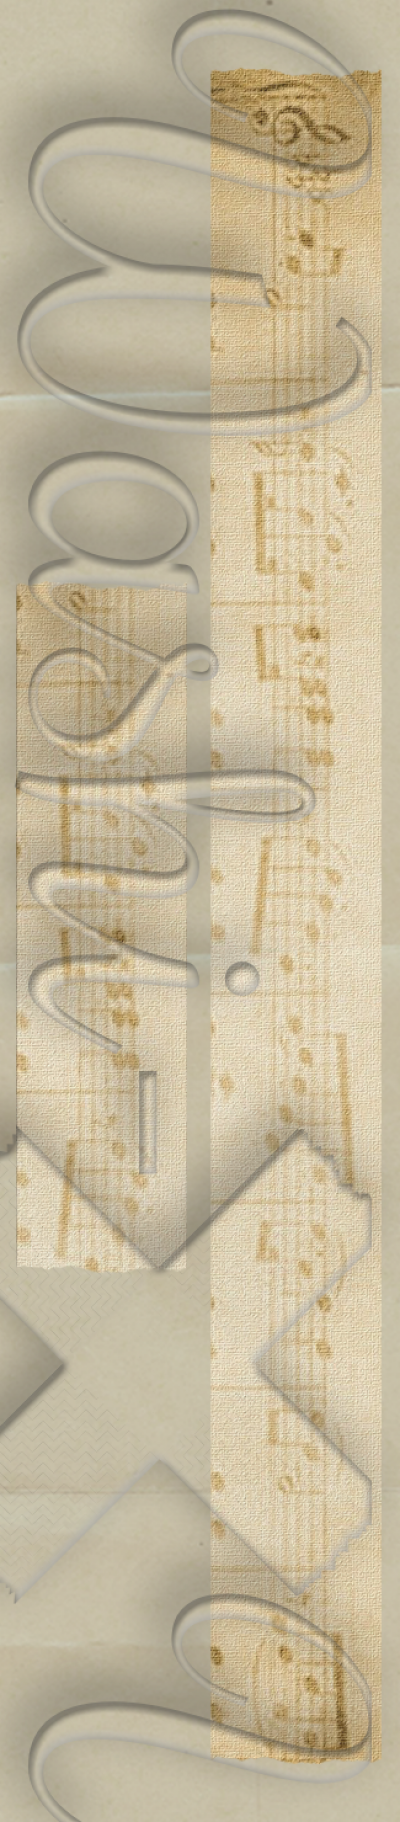 Music sheet patterned washi tape style 3